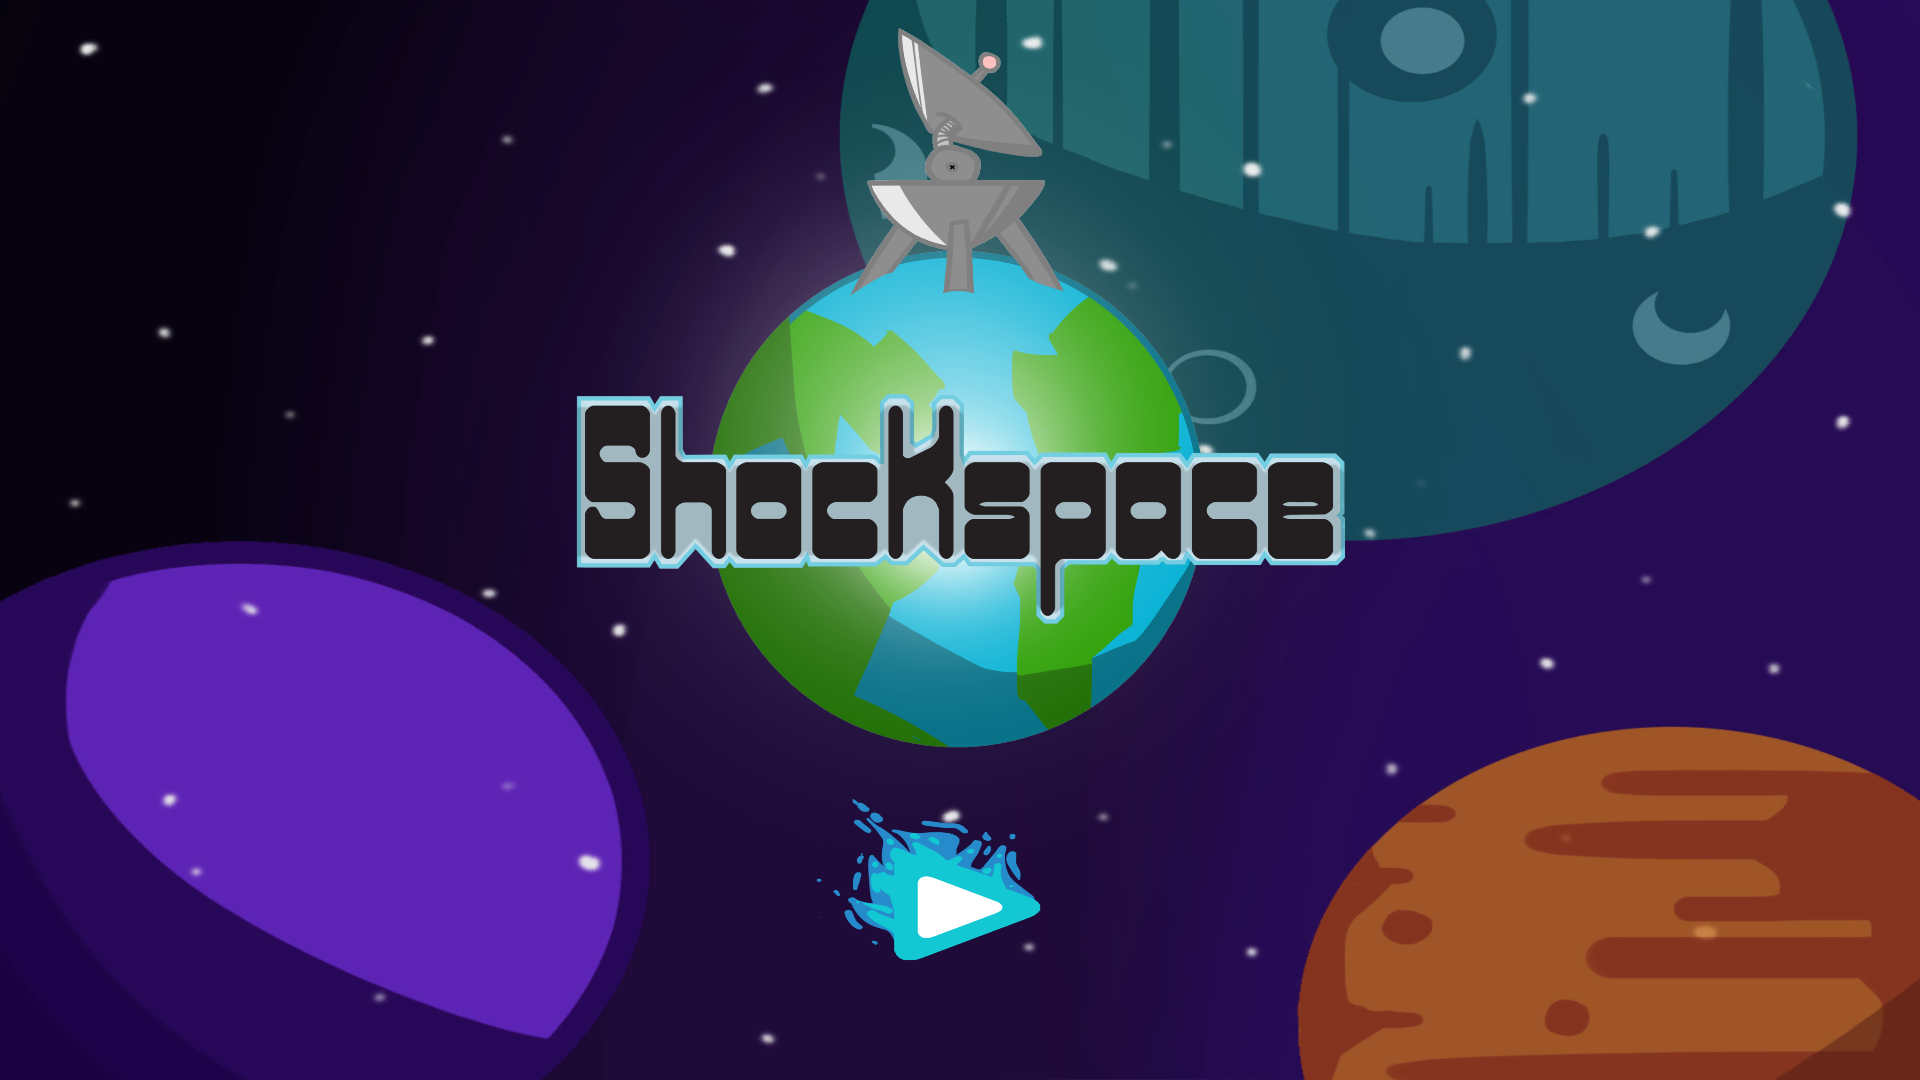 Shockspace